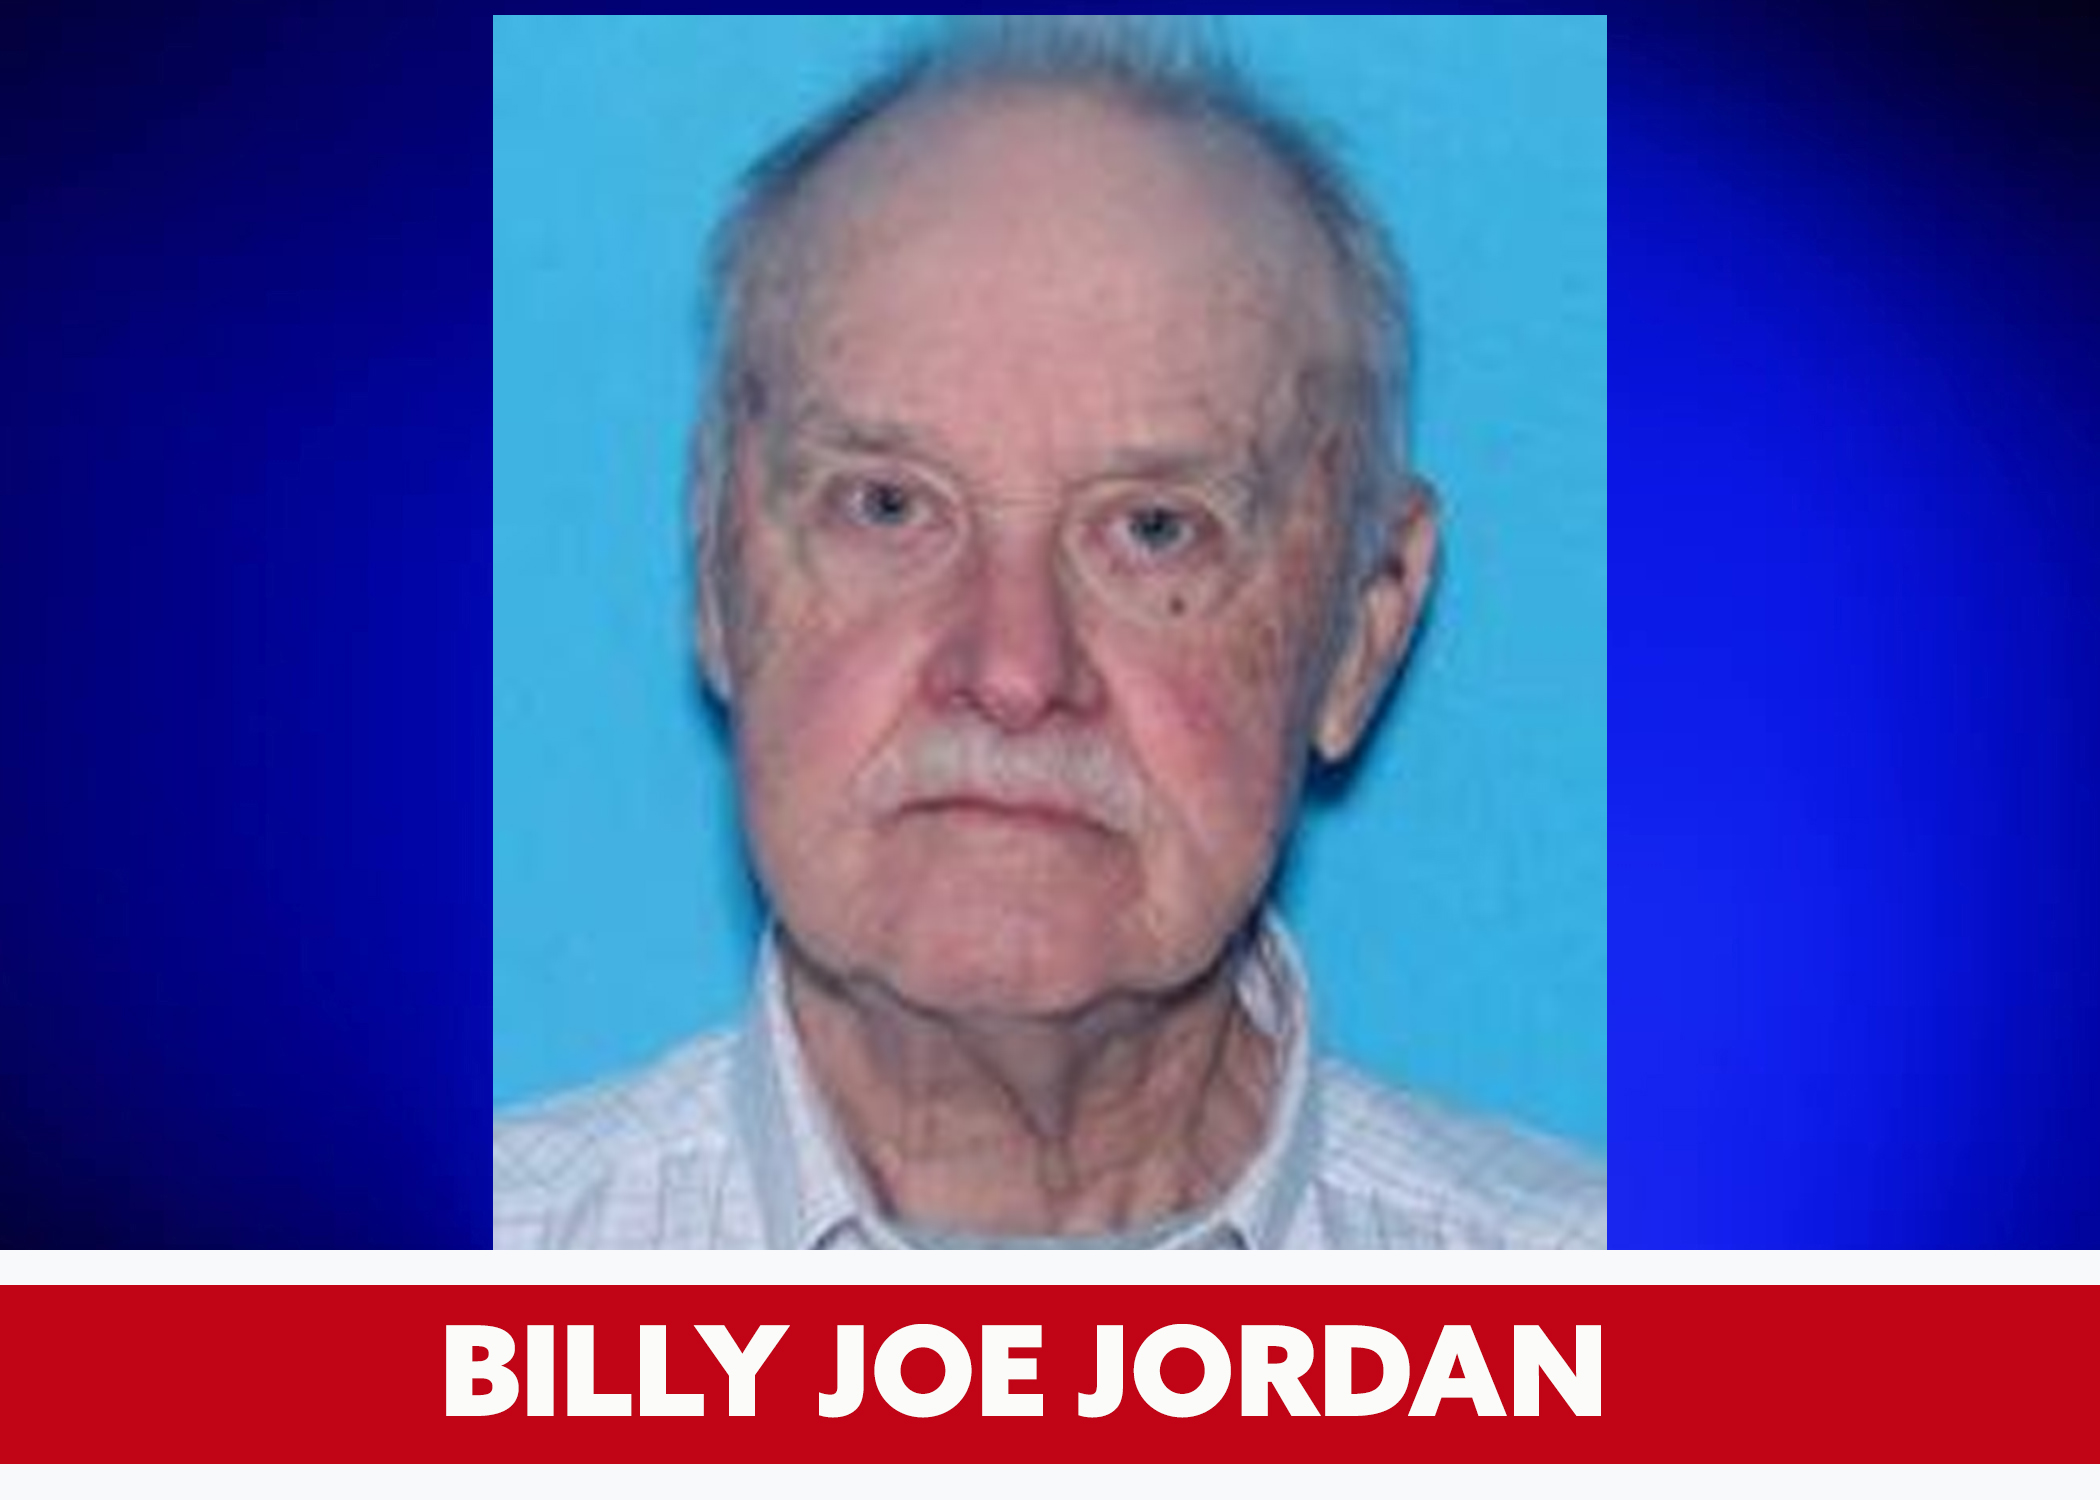 Missing and Endangered Person Alert: Billy Joe Jordan